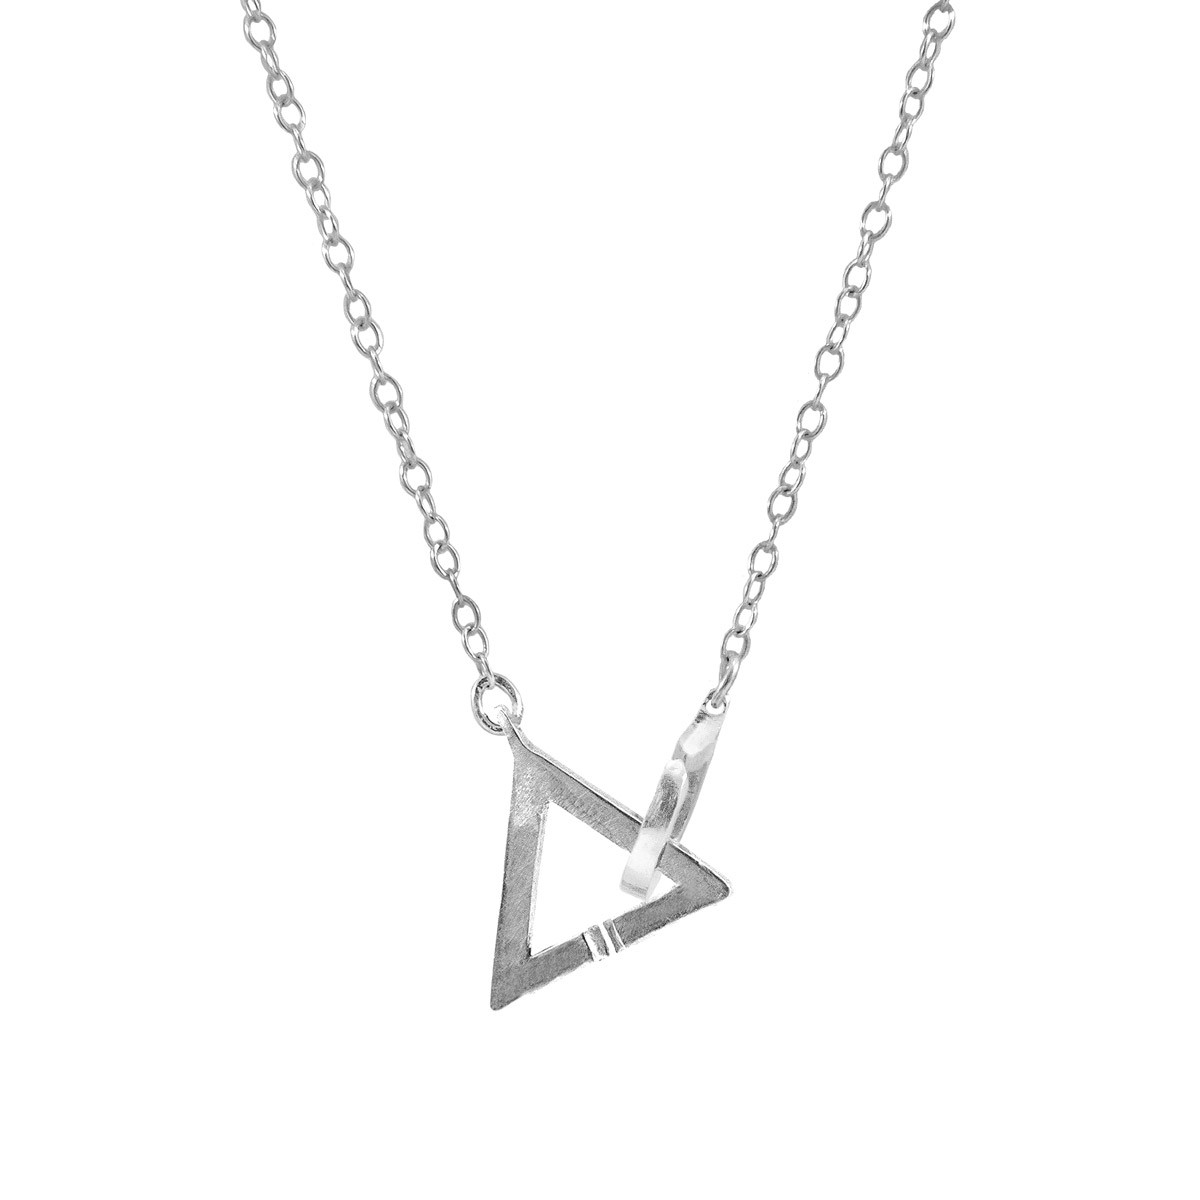 Geometric Triangle Link Paradise Silver Necklace Pendant